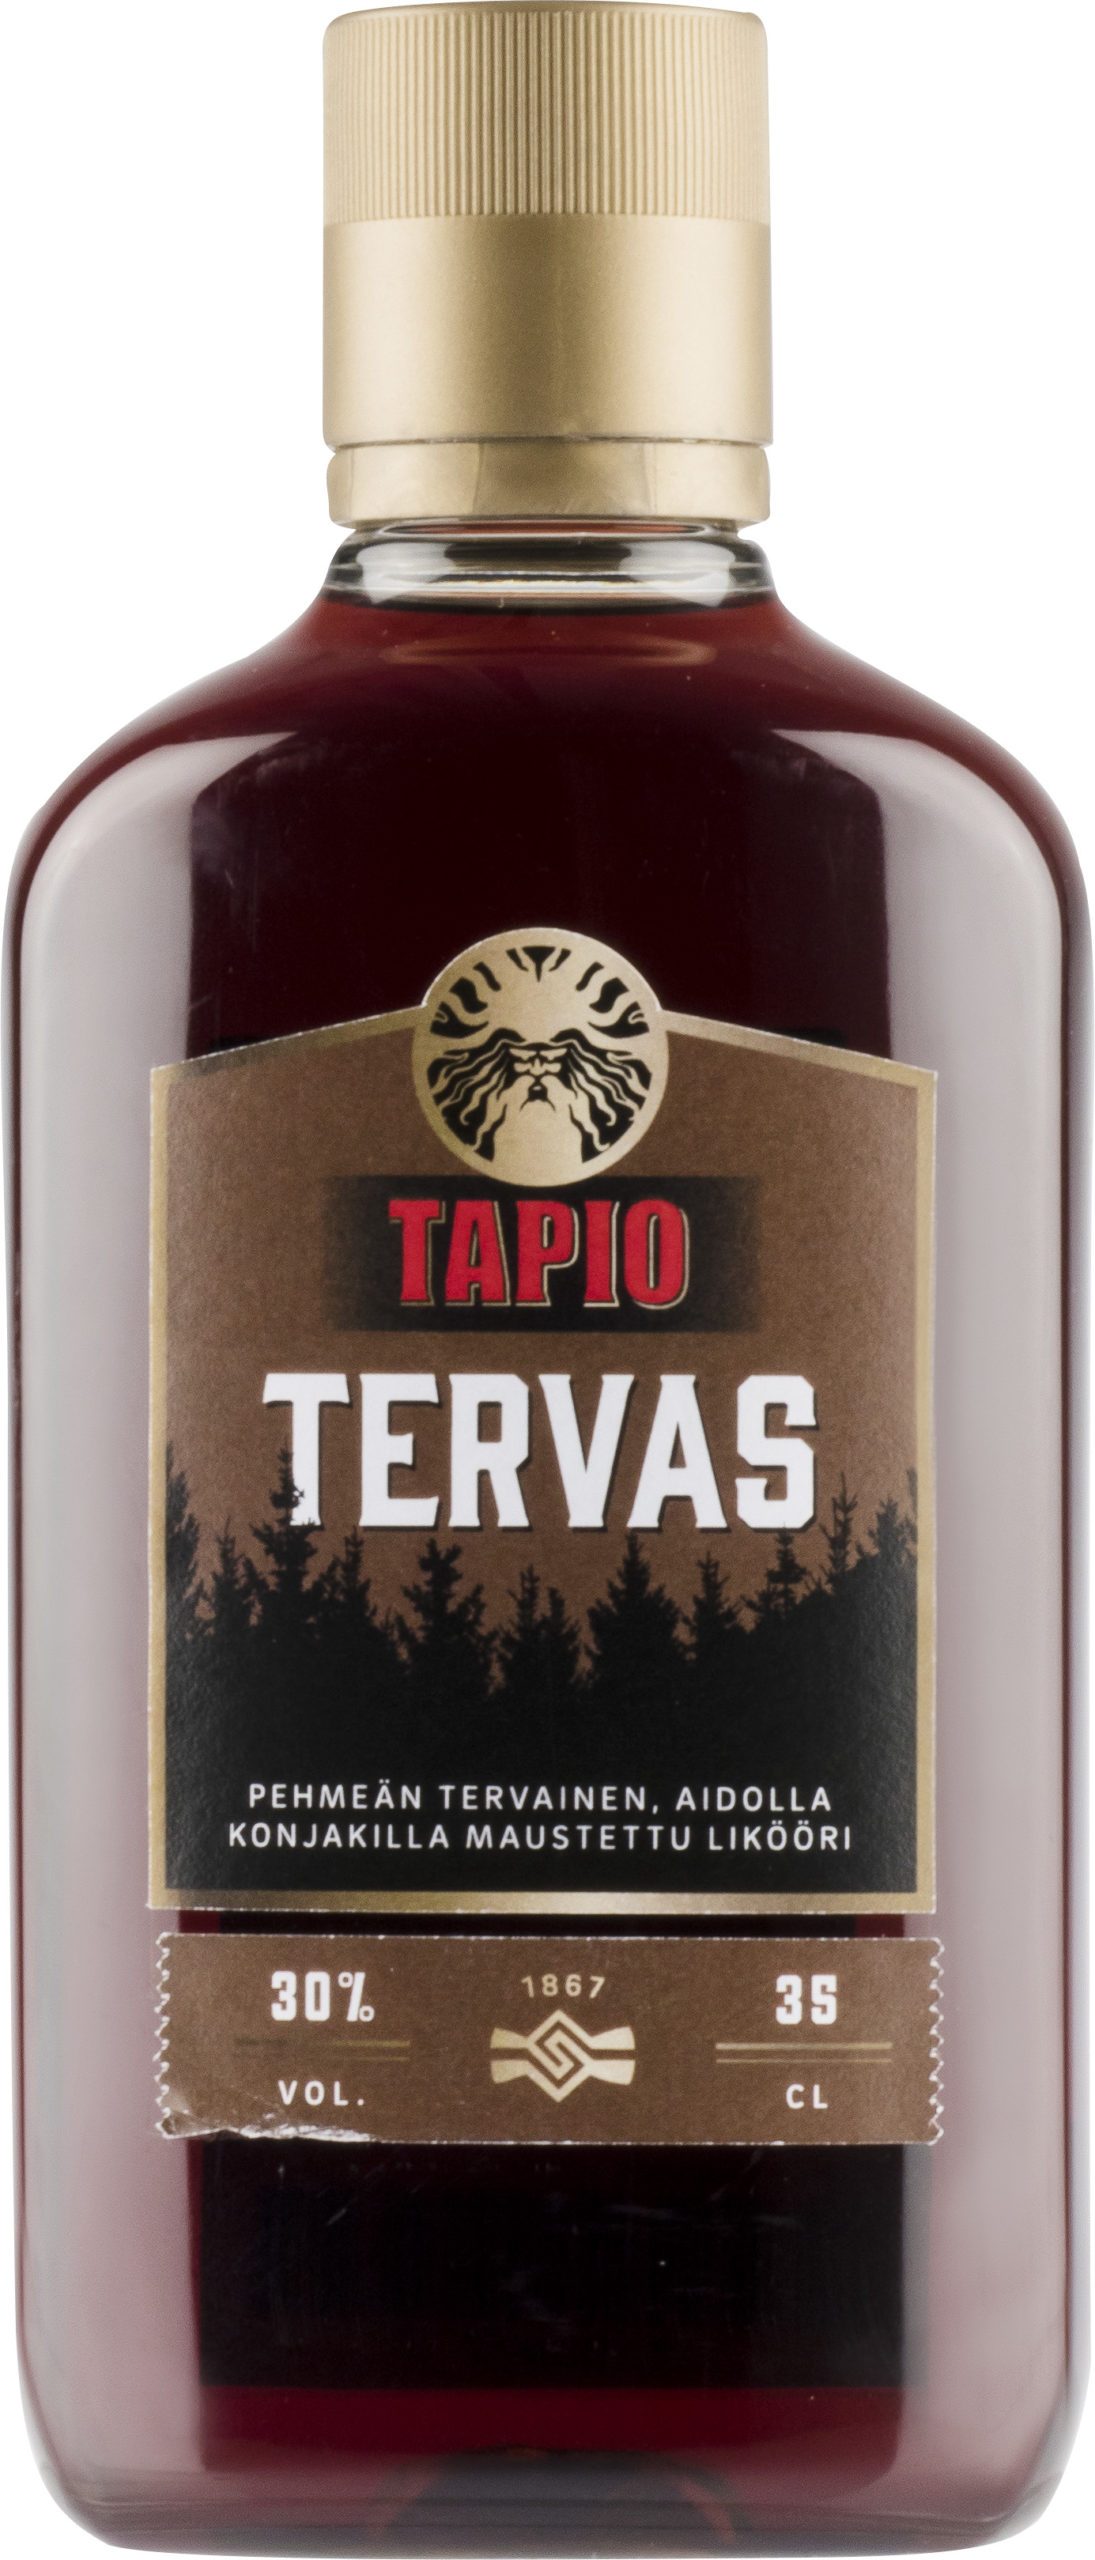 Tapio Tervas plastic bottle